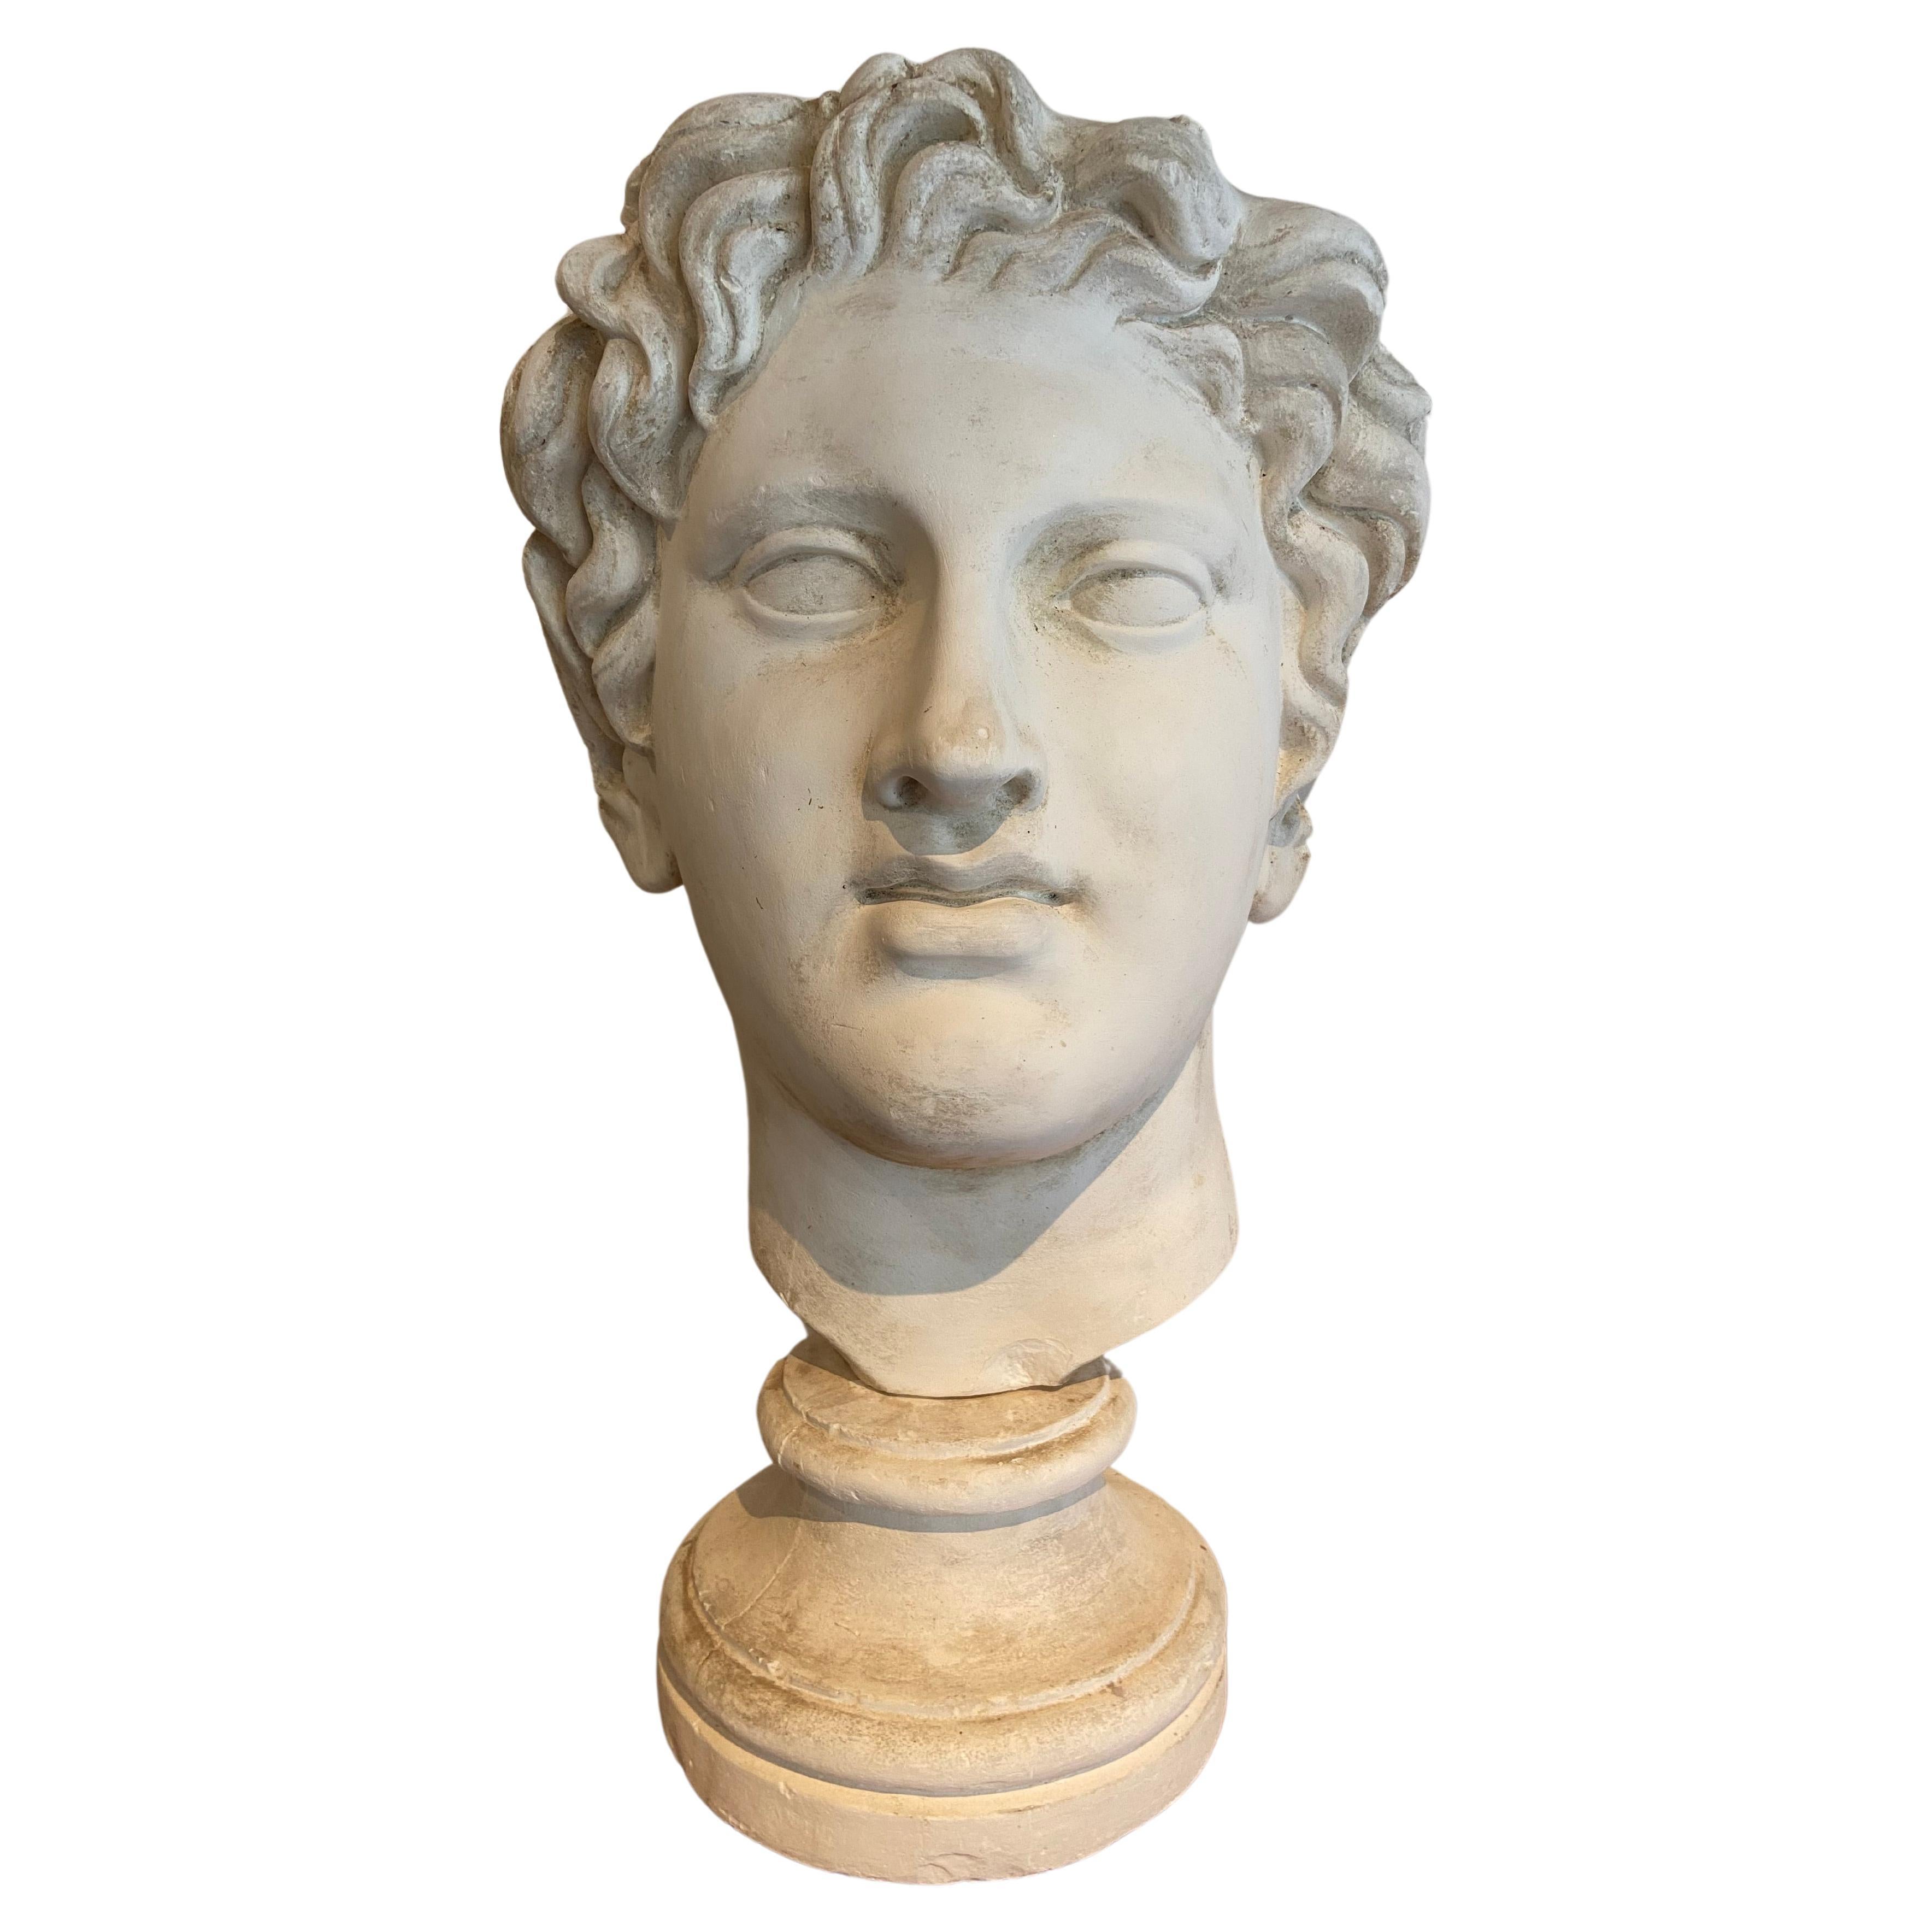 Stucco head of a roman figure